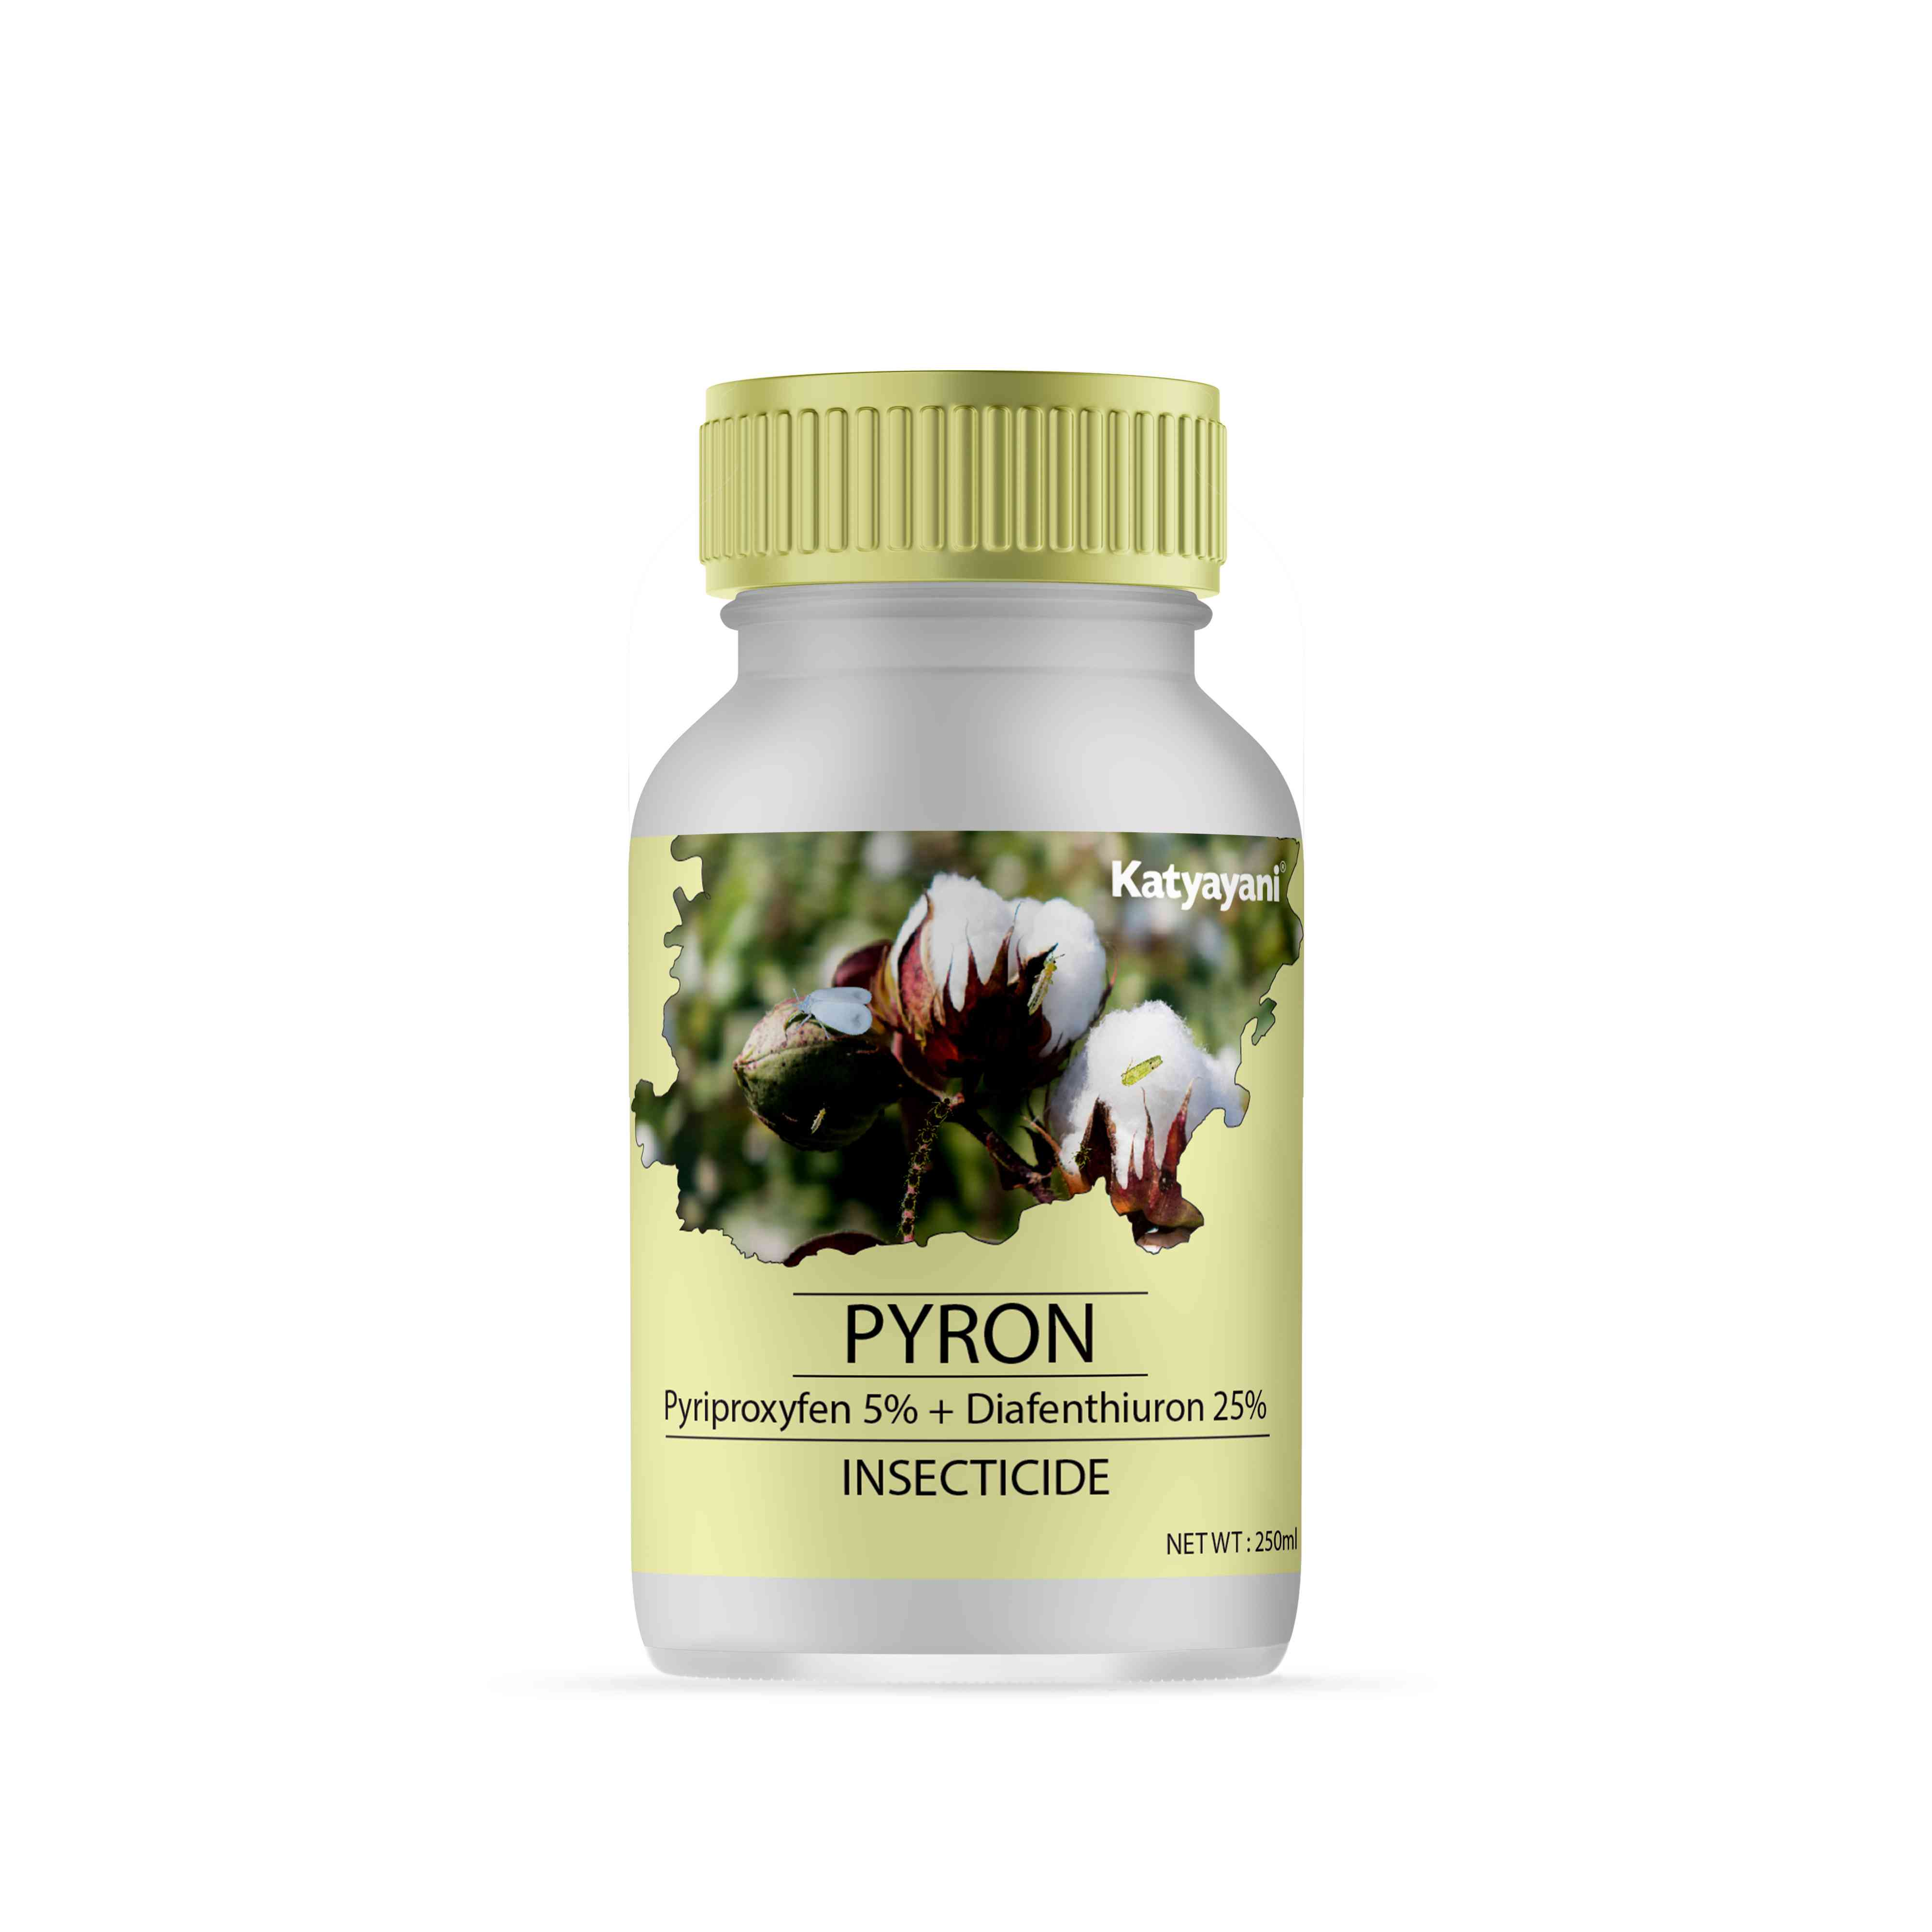 Katyayani Pyron Pyriproxyfen 5% + Diafenthiuron 25% se